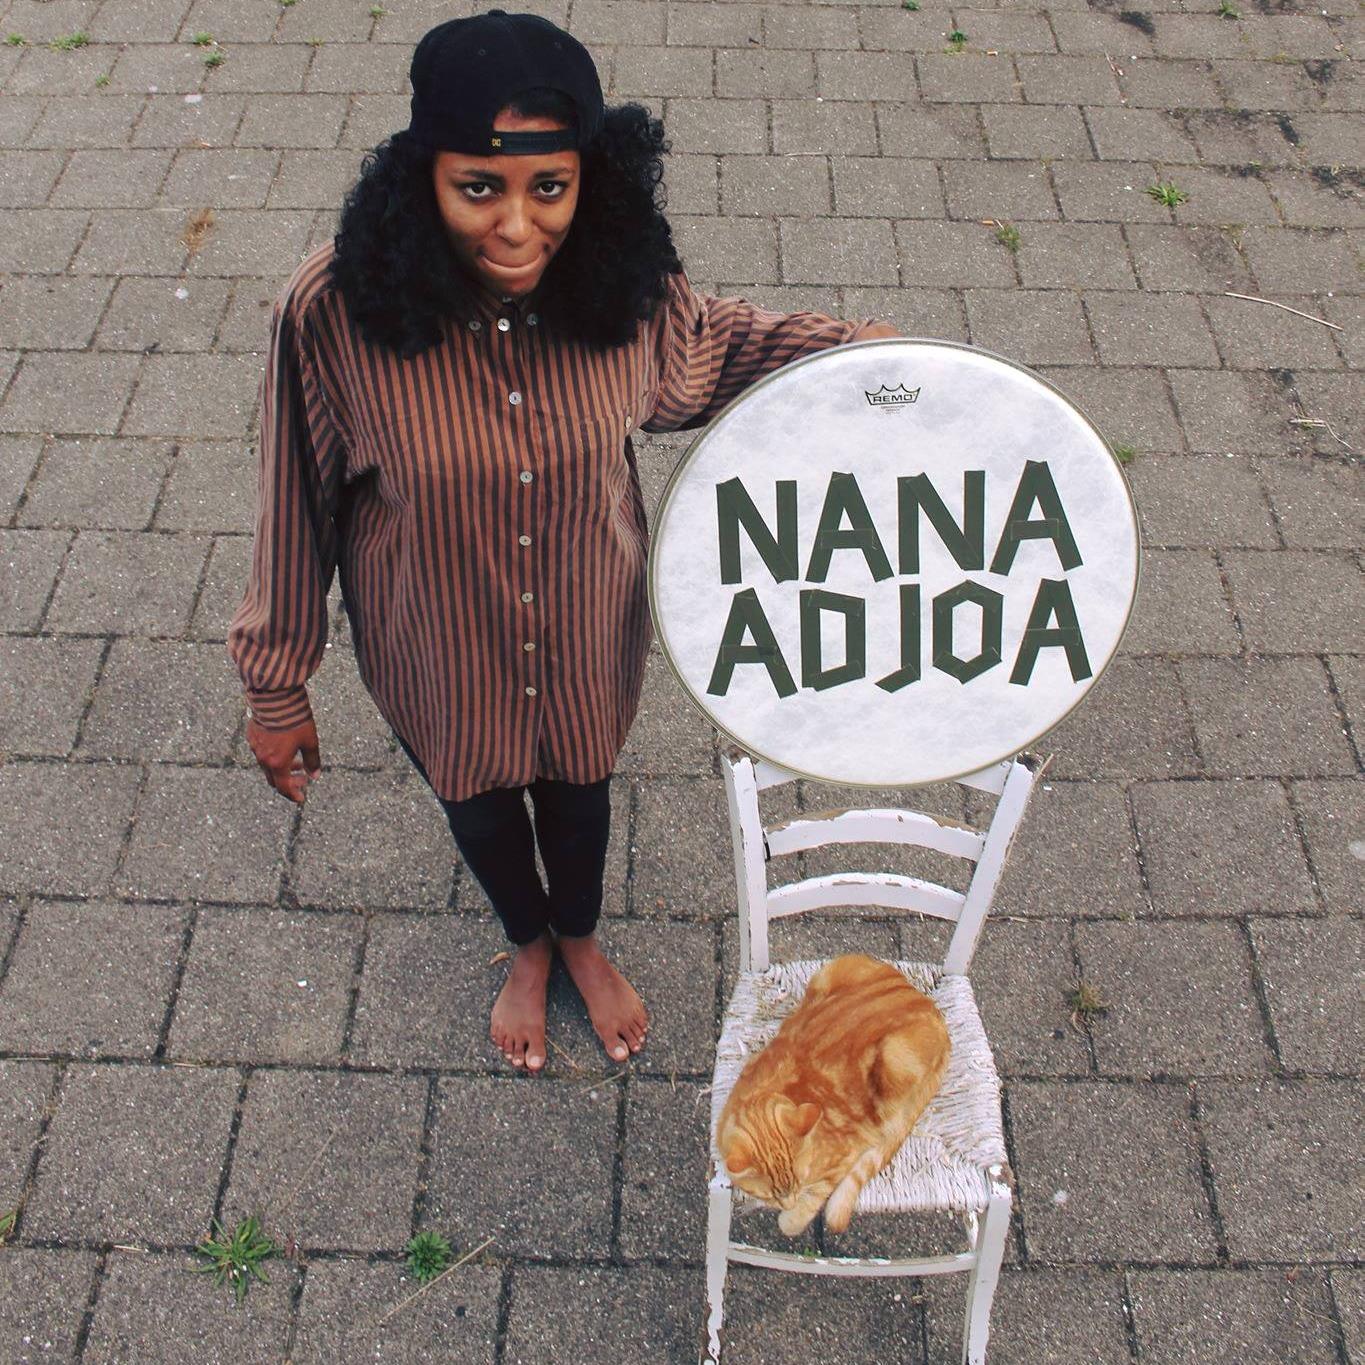 Nana Adjoa